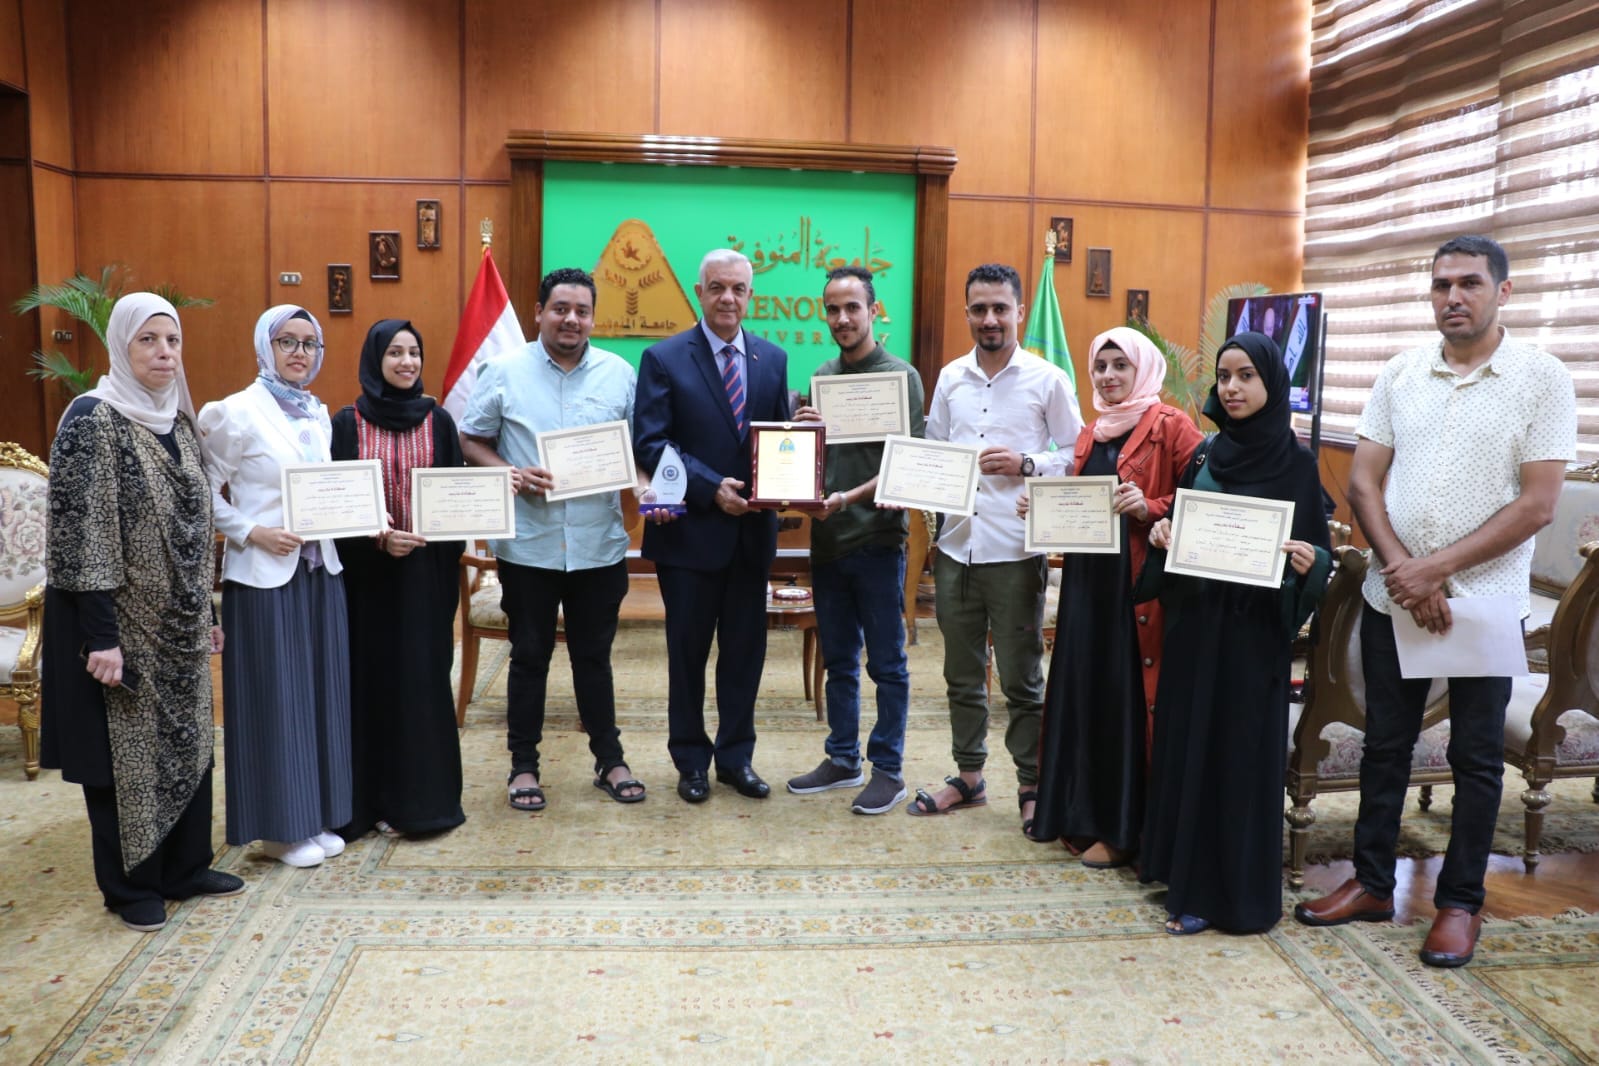 Mubarak hands Arab students certificates of practical training at Menoufia University